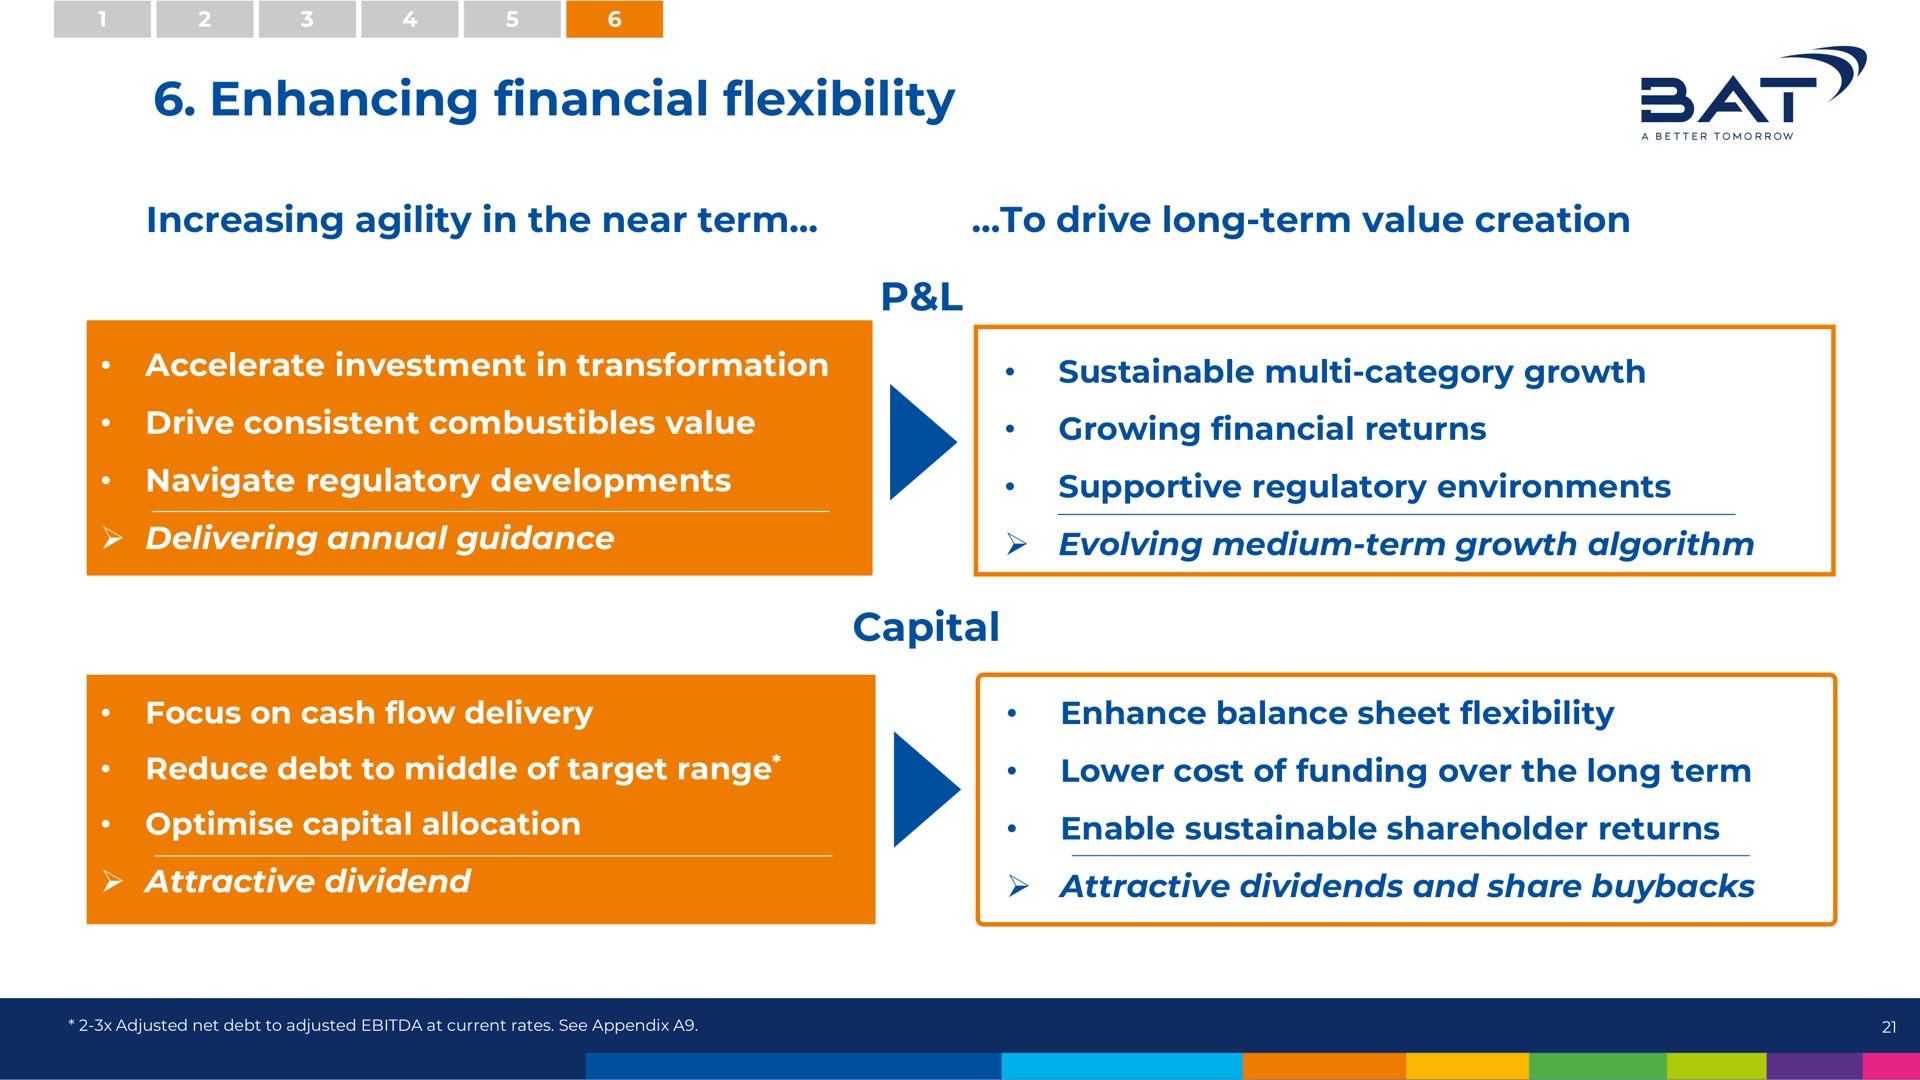 enhancing financial flexibility a capital | BAT